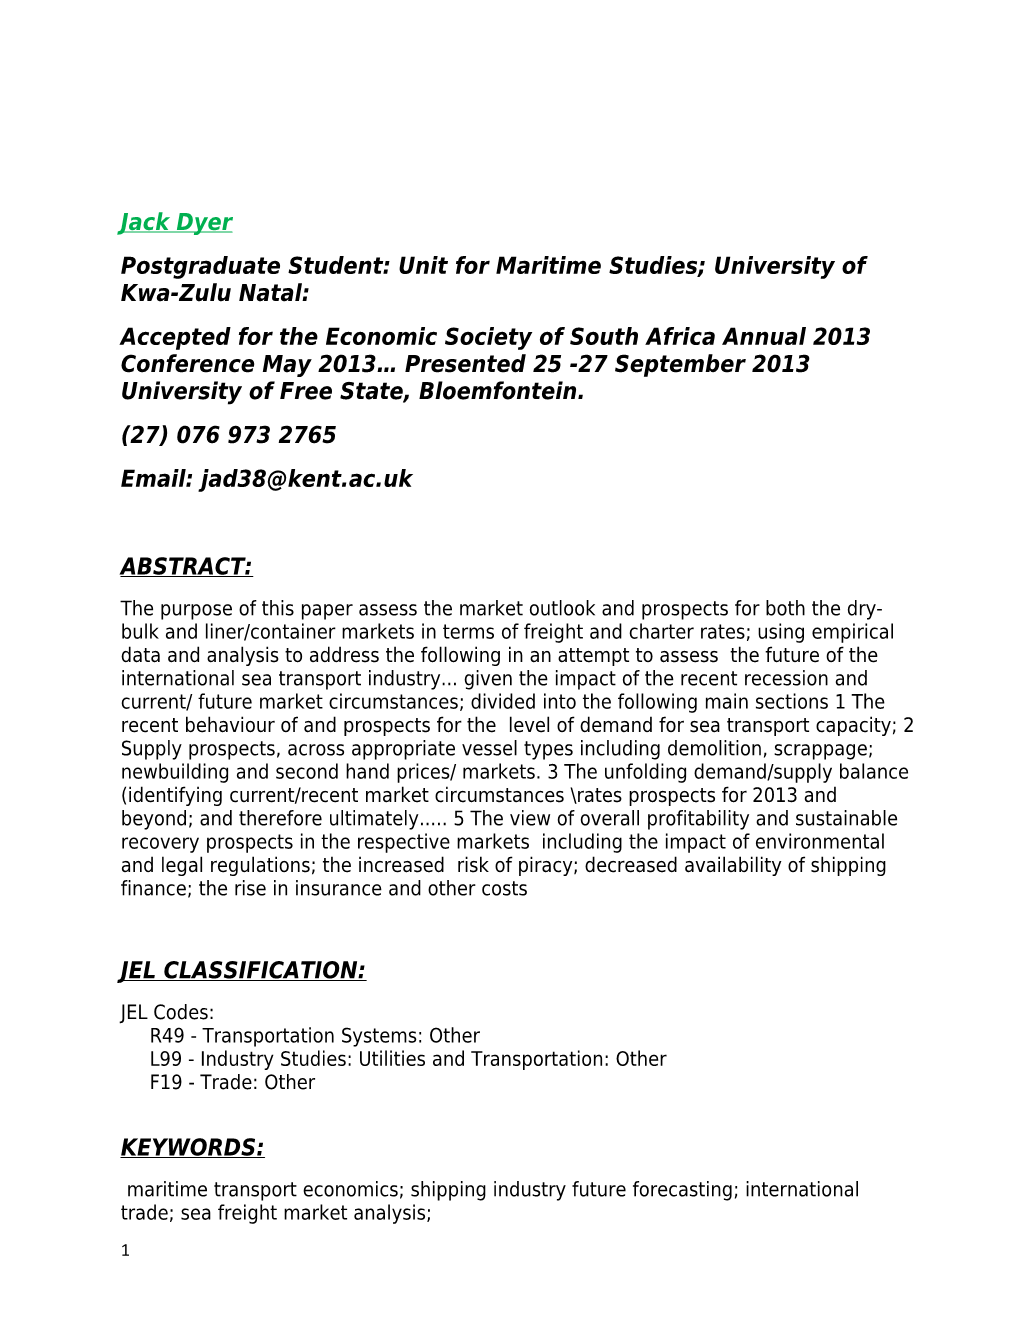 Postgraduate Student: Unit for Maritime Studies; University of Kwa-Zulu Natal